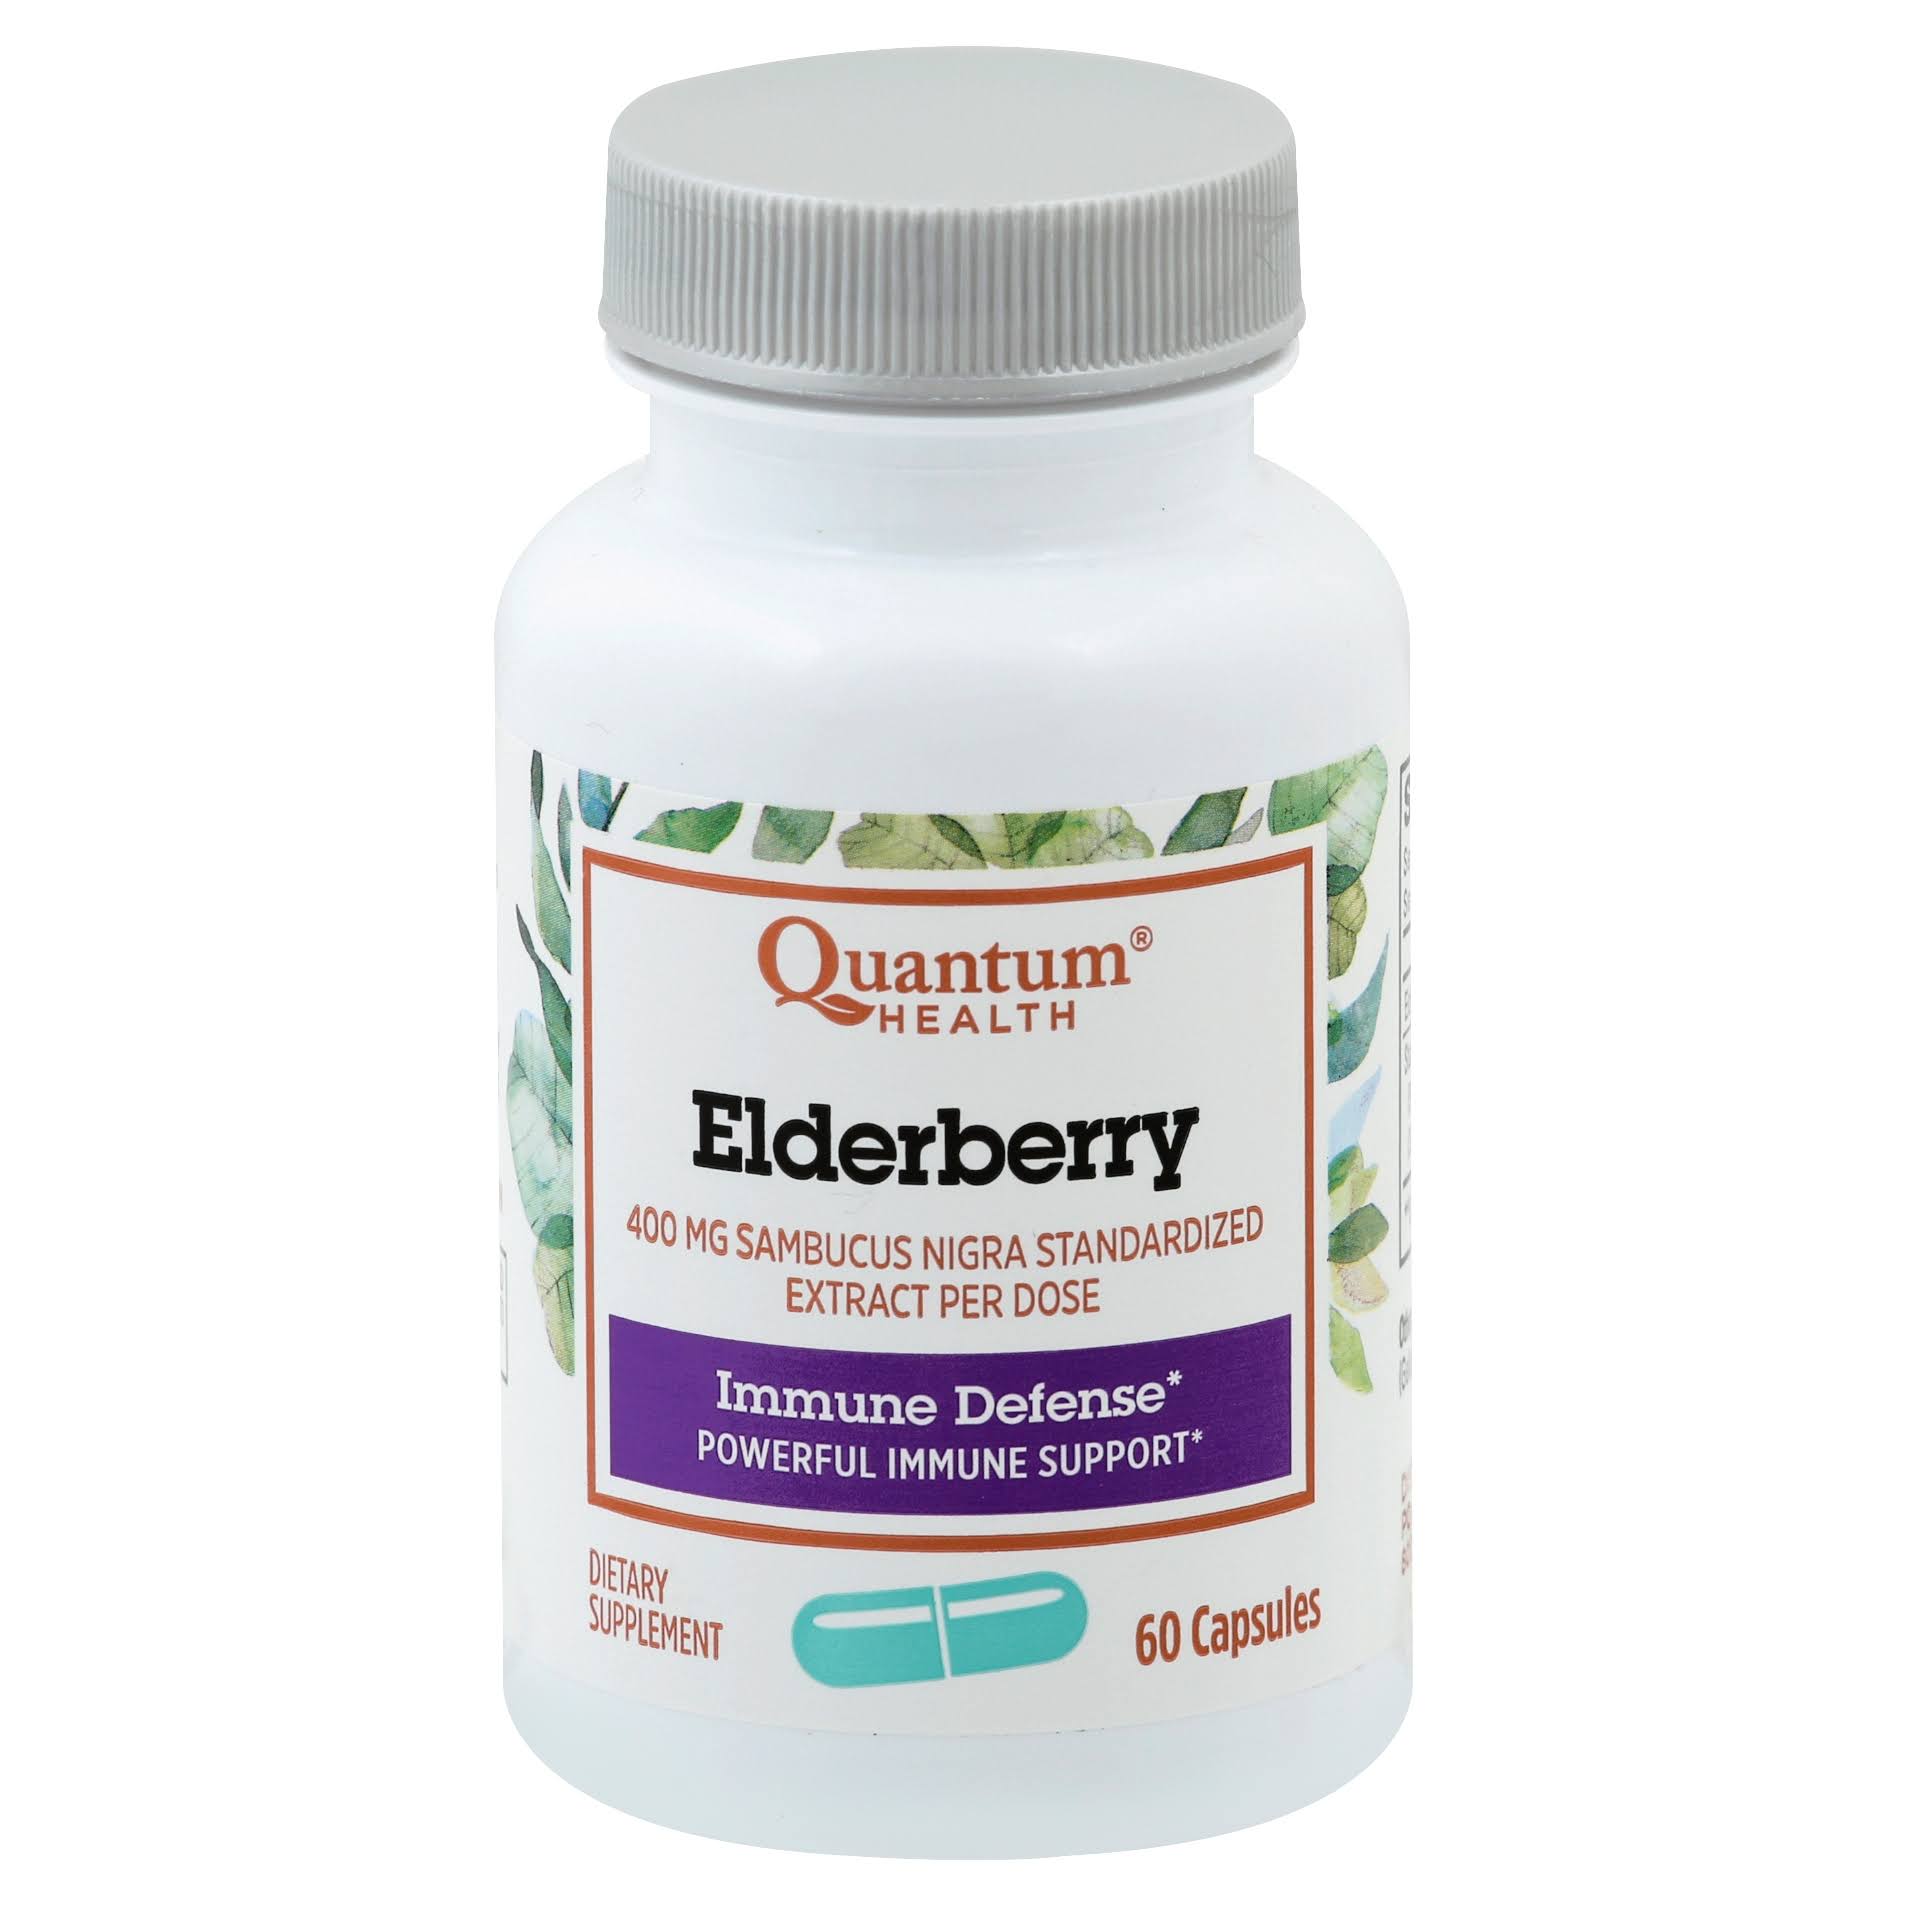 Quantum Elderberry Dietary Supplement - 60ct